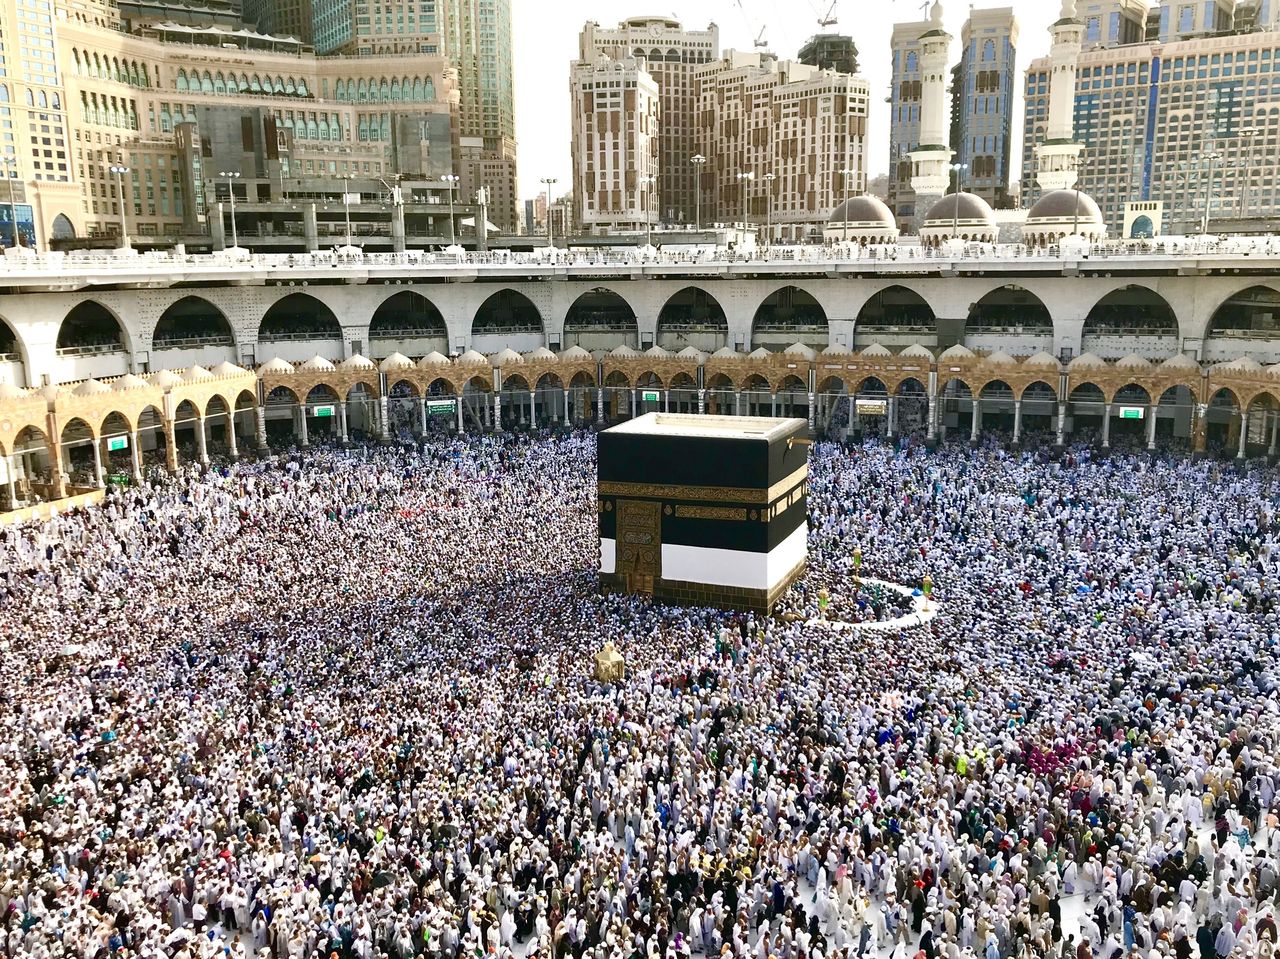 A pilgrimage to Mecca gathers hundreds of thousands of the faithful.